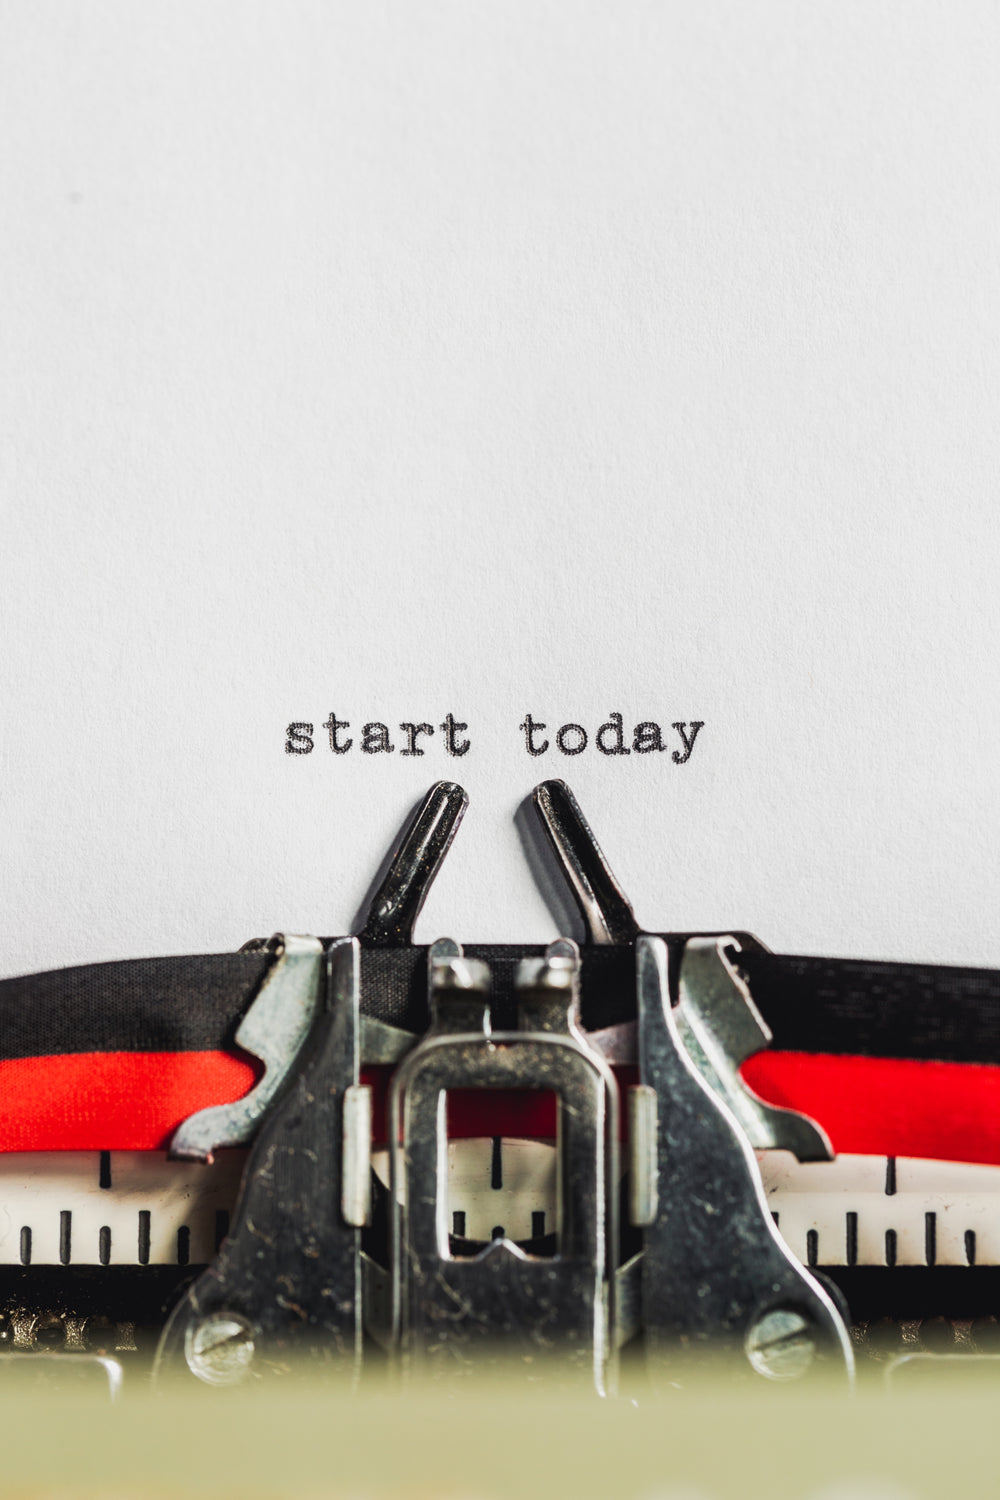 typewrite says start today